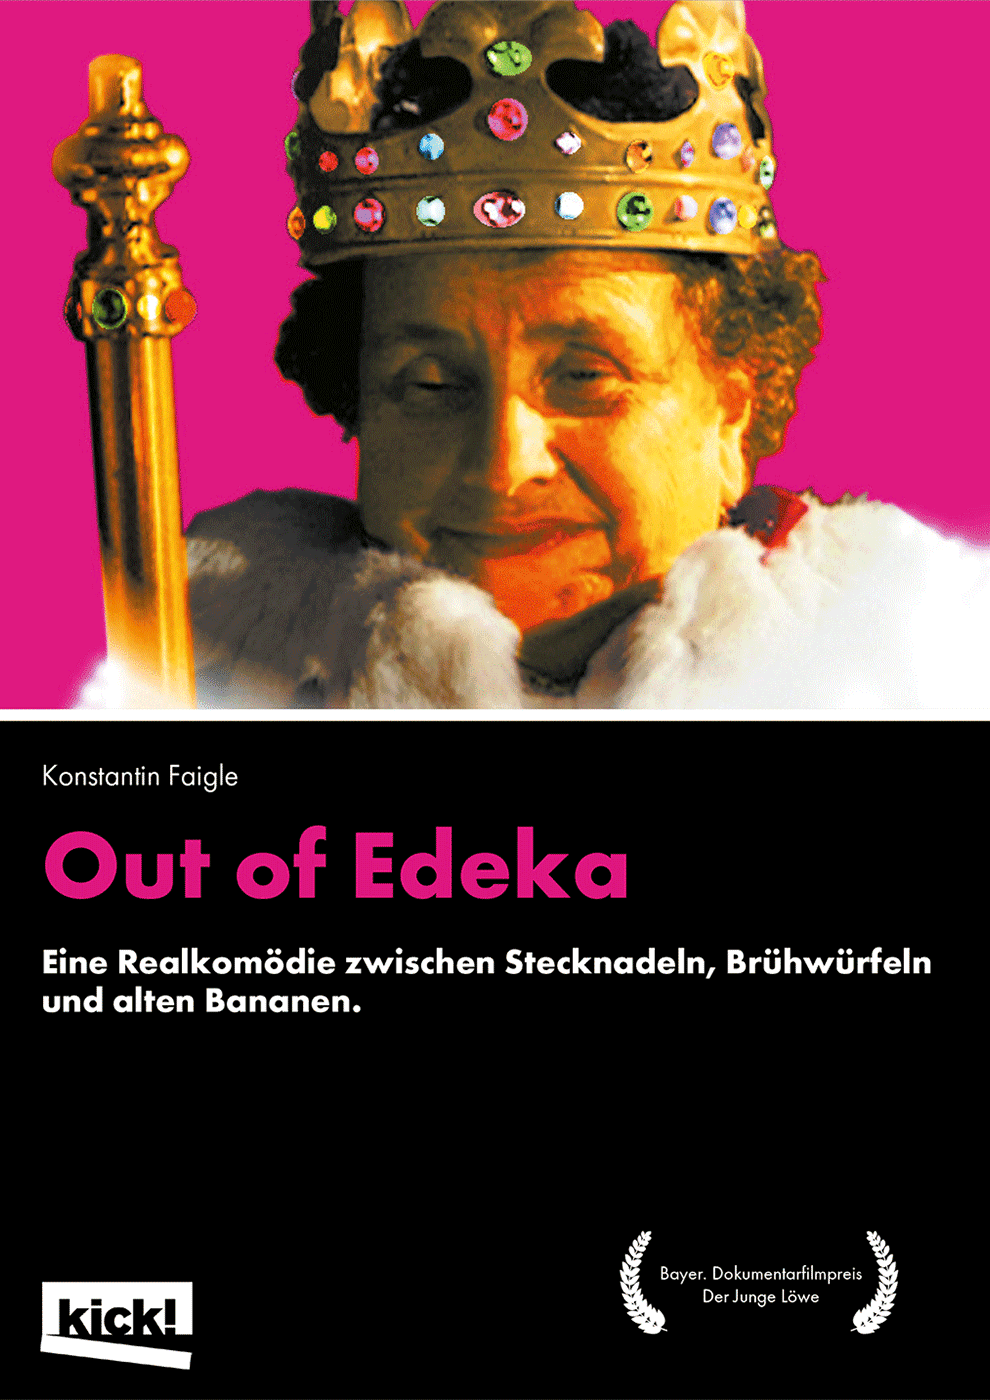 Out of Edeka Ein Film von Konstantin Faigle